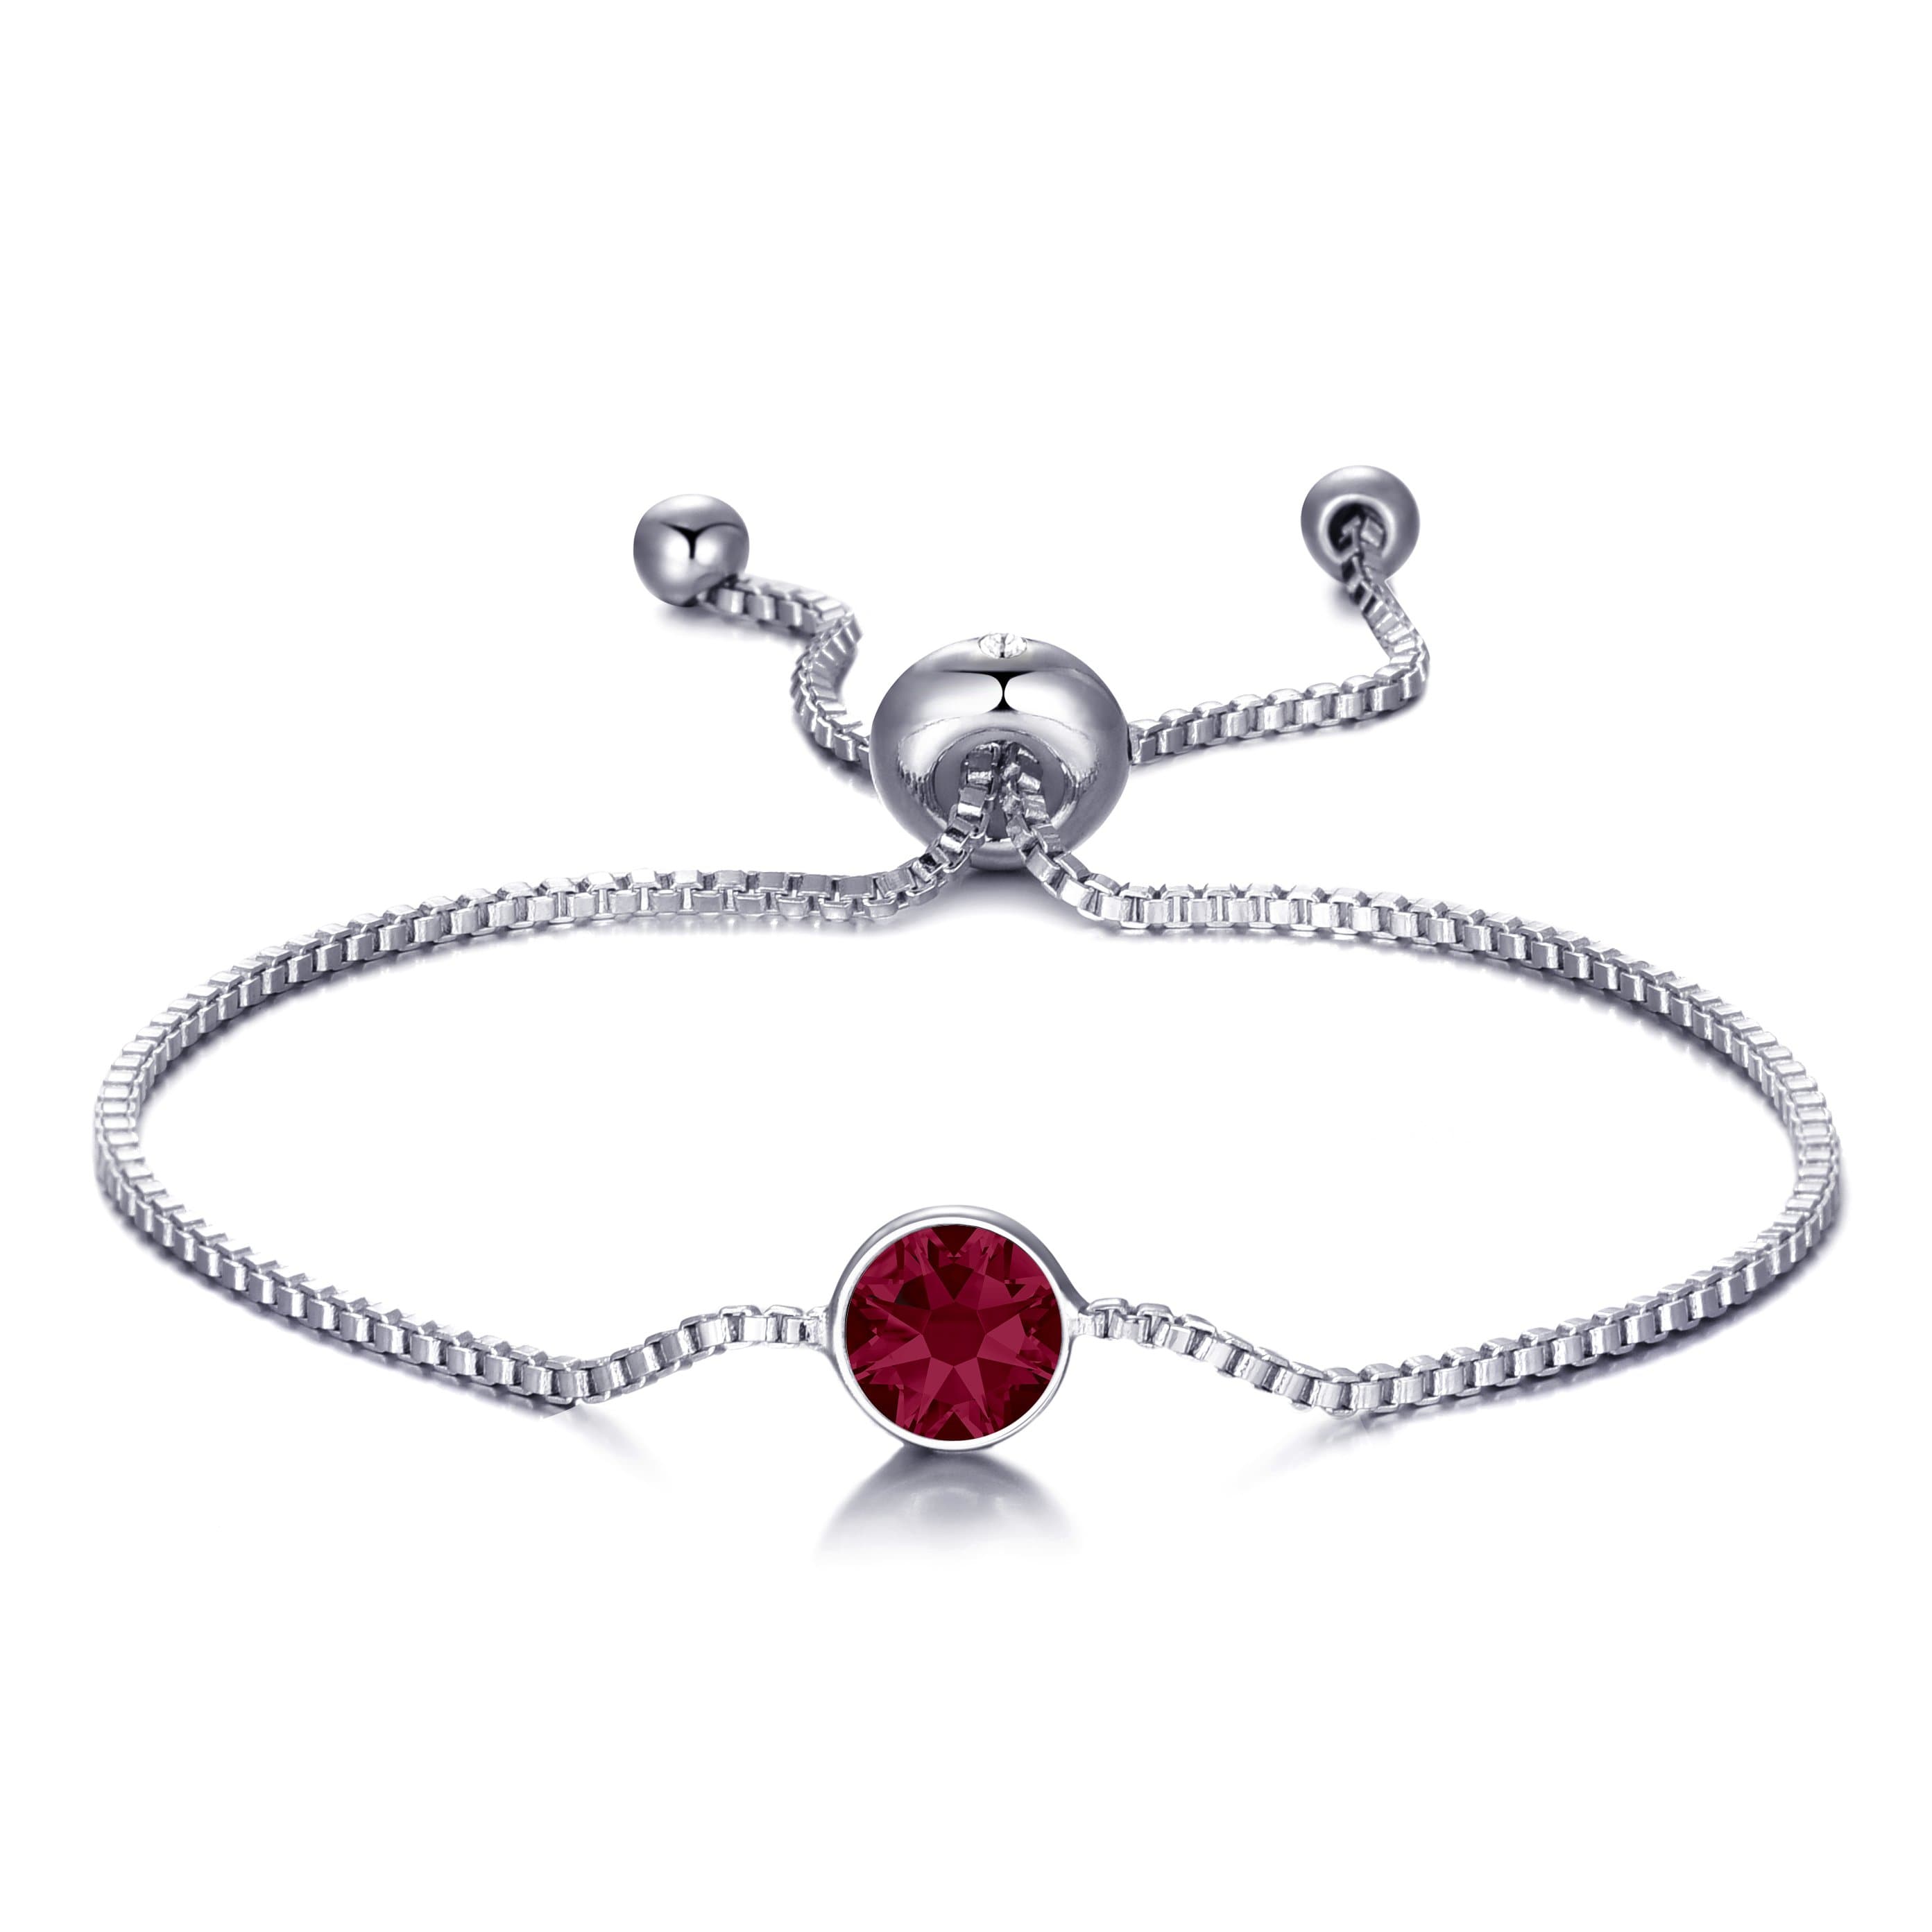 Red Crystal Bracelet Created with Zircondia® Crystals by Philip Jones Jewellery